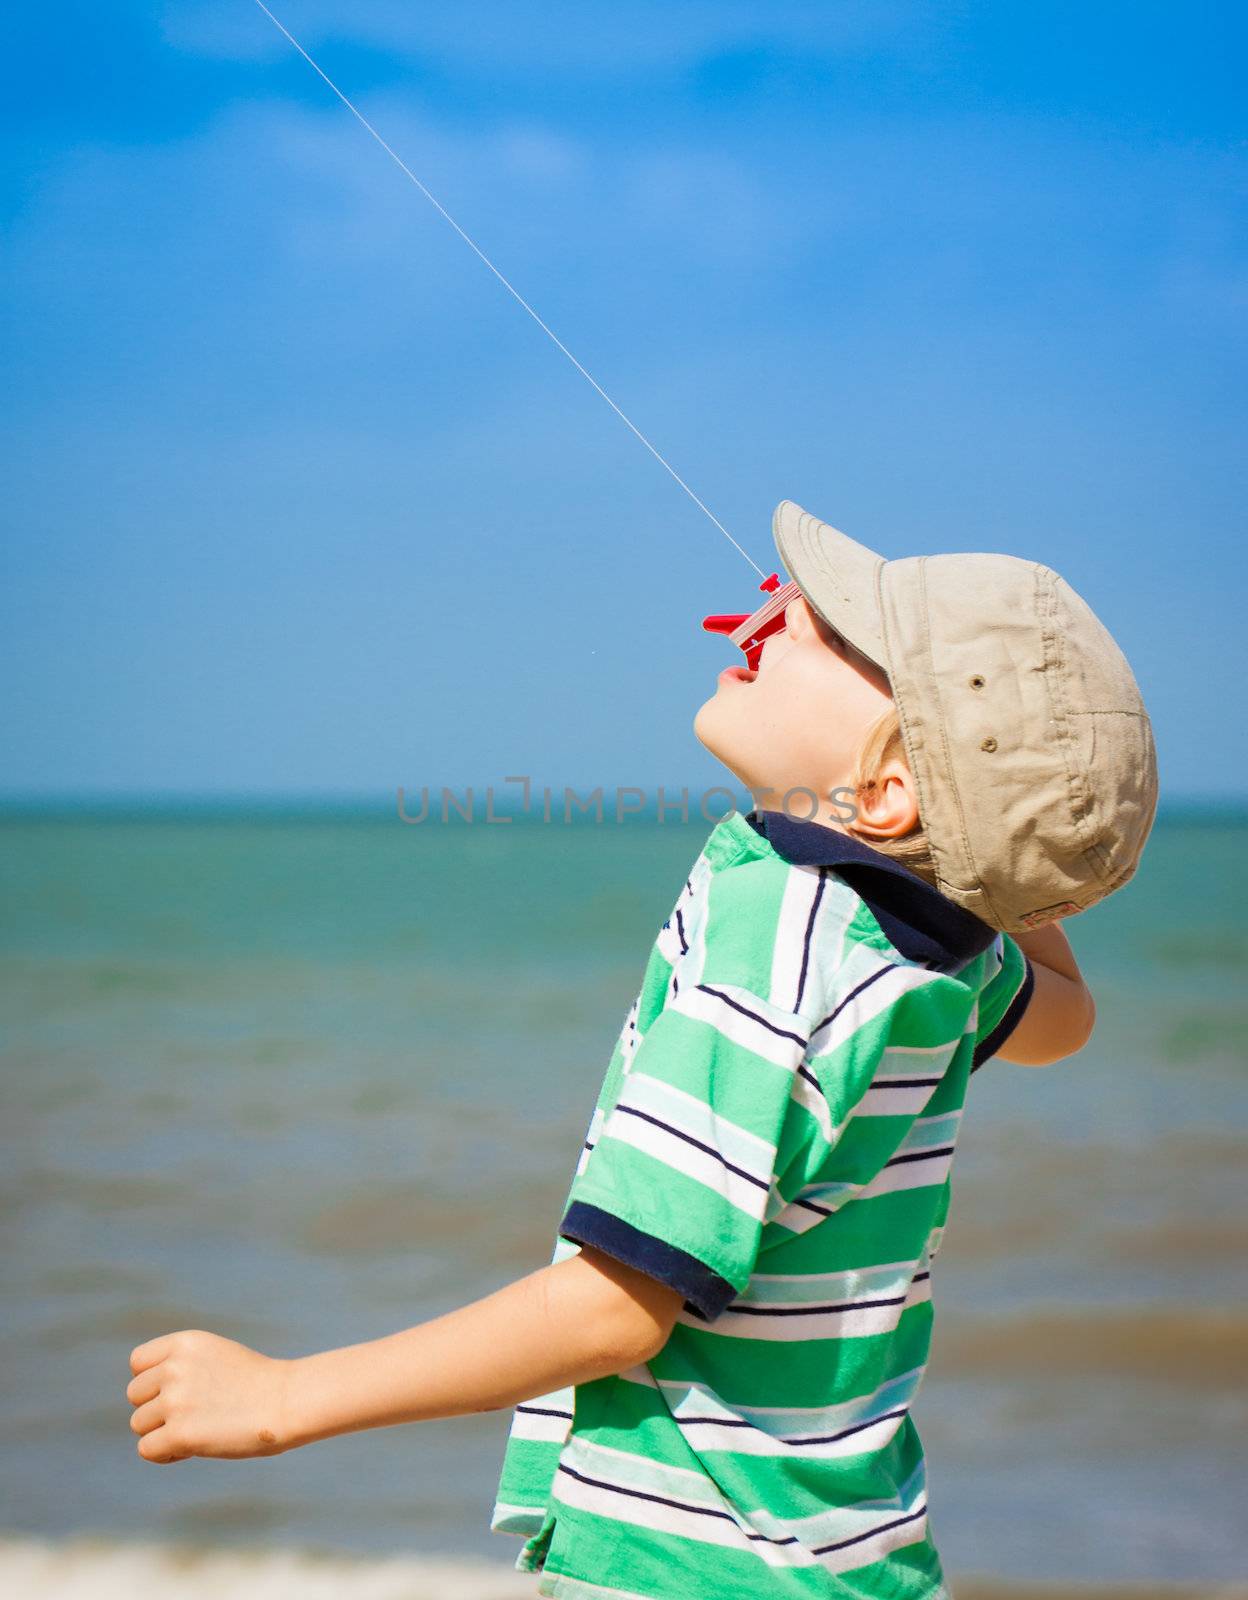 A boy flying a kite at the beach.